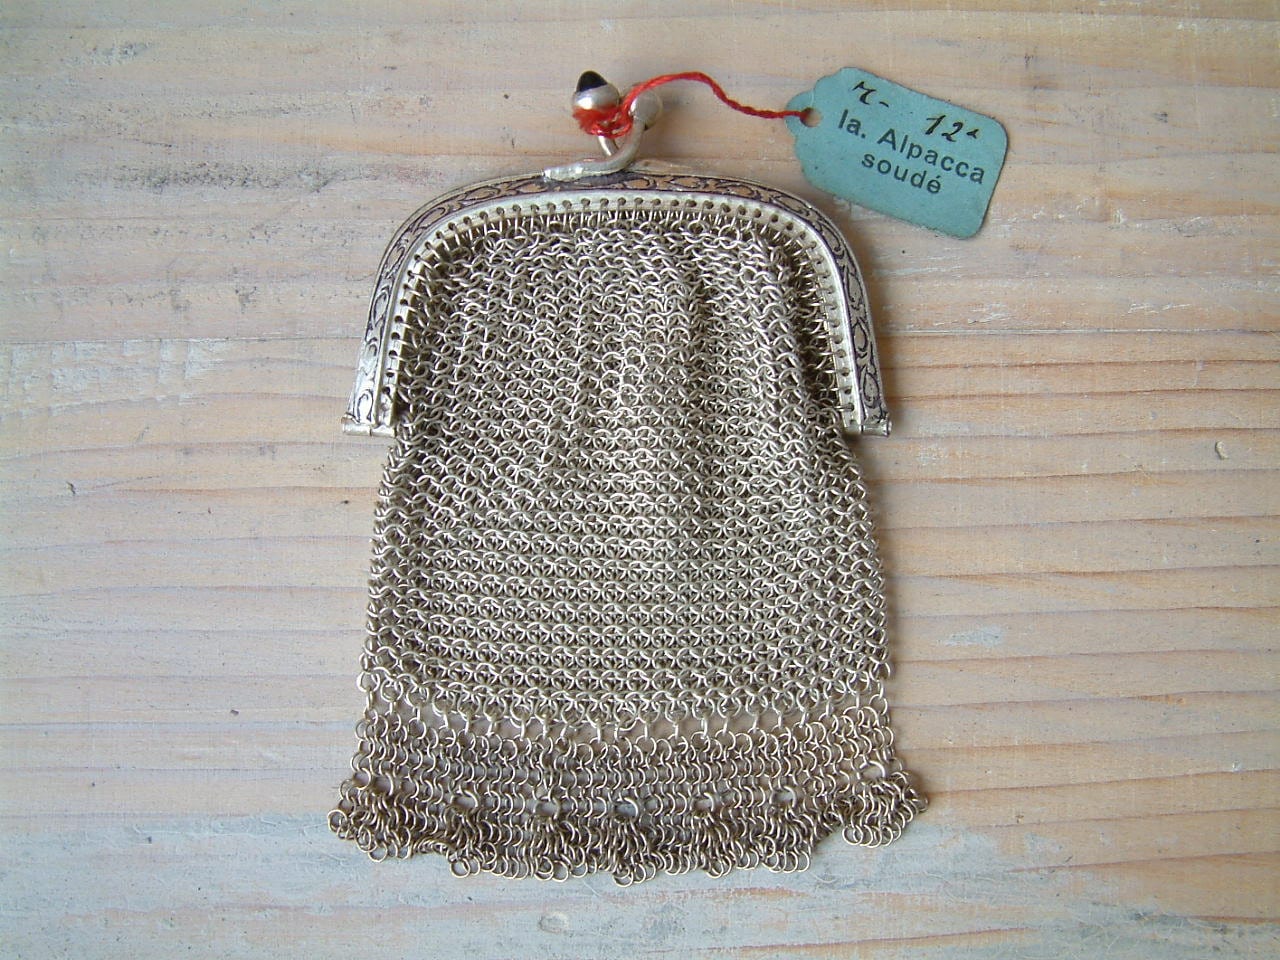 Vintage french chain mail coin purse. Alpaca